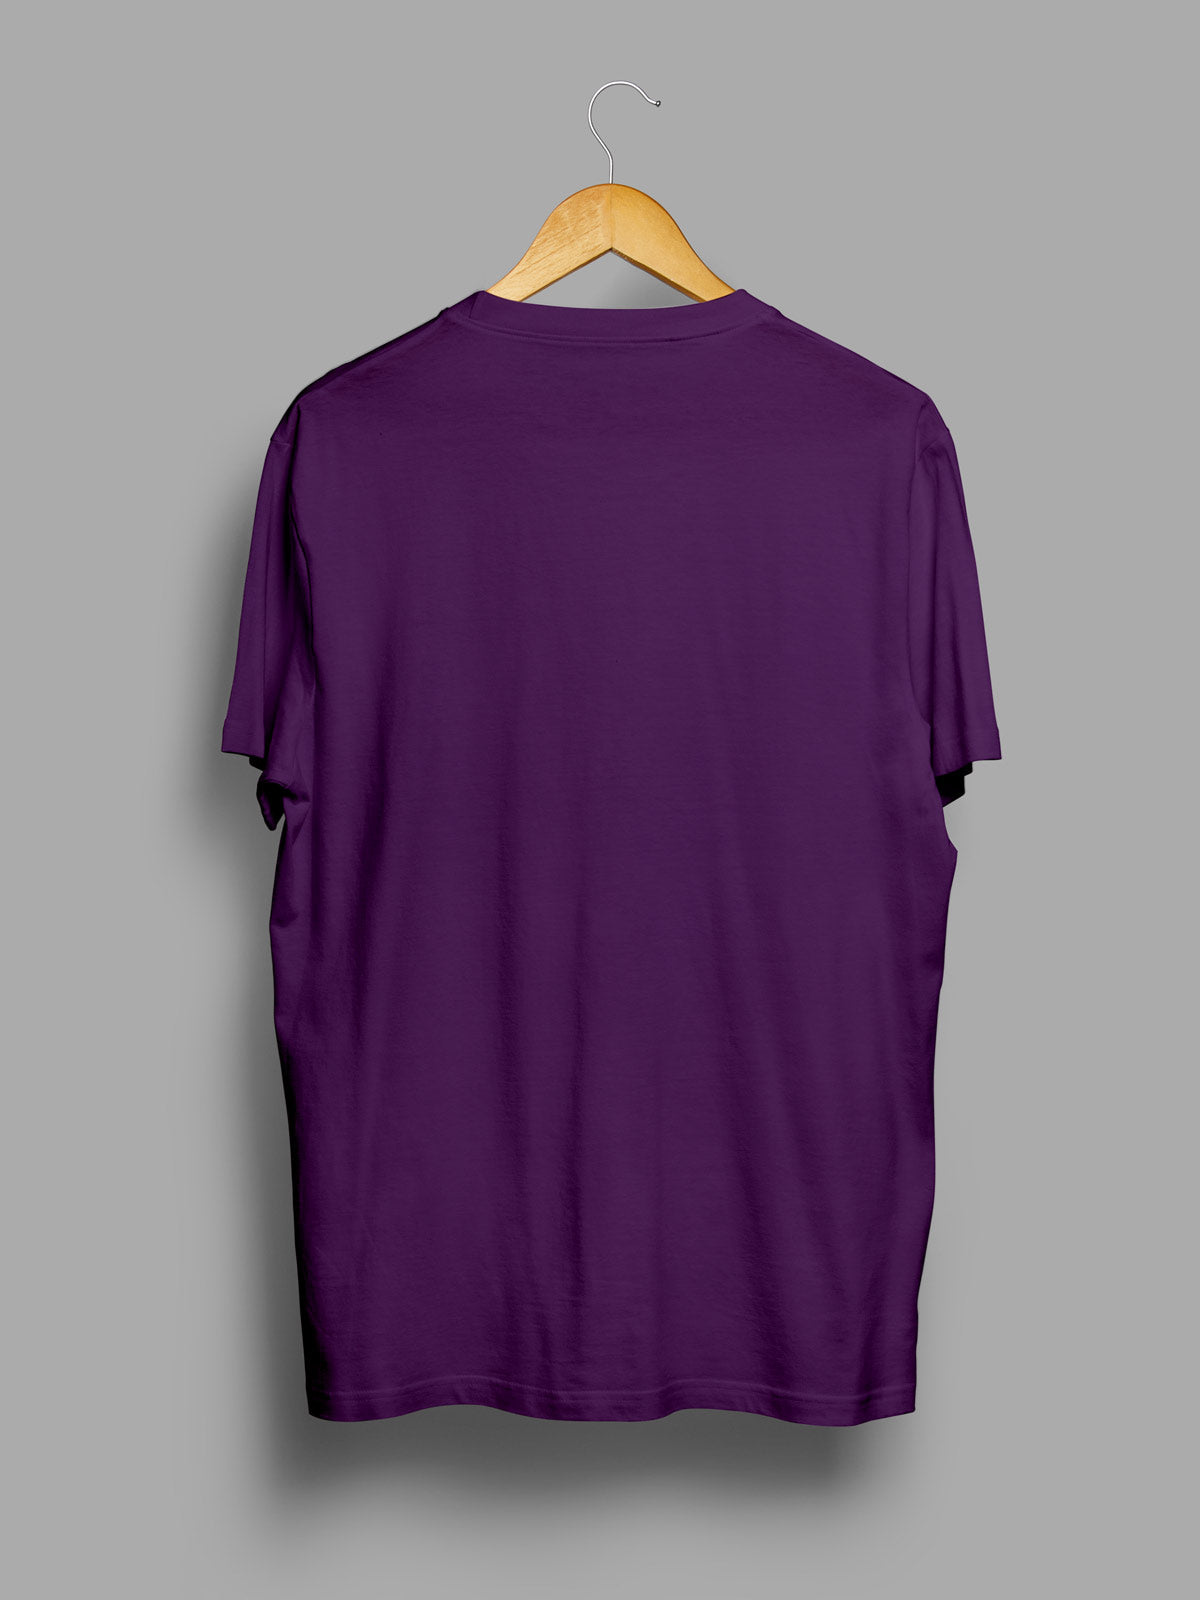 Pack of 3 | Muted Peach, Deep Purple & Coffee Brown Unisex Plain T shirt